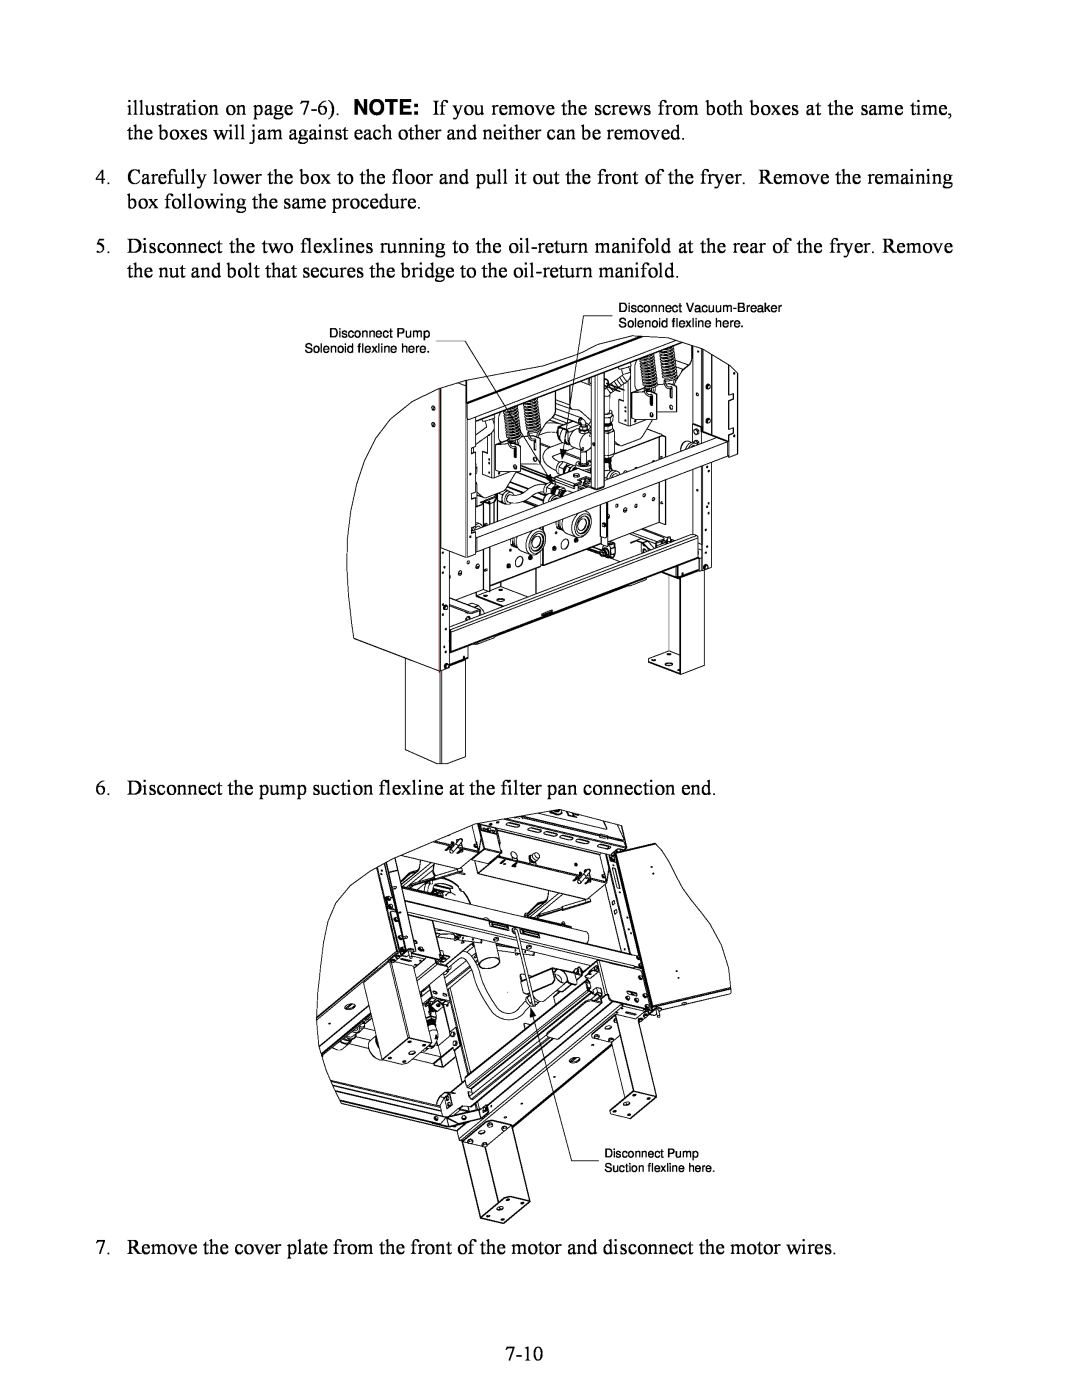 Frymaster H22SC, H17SC, H14SC manual 7-10 